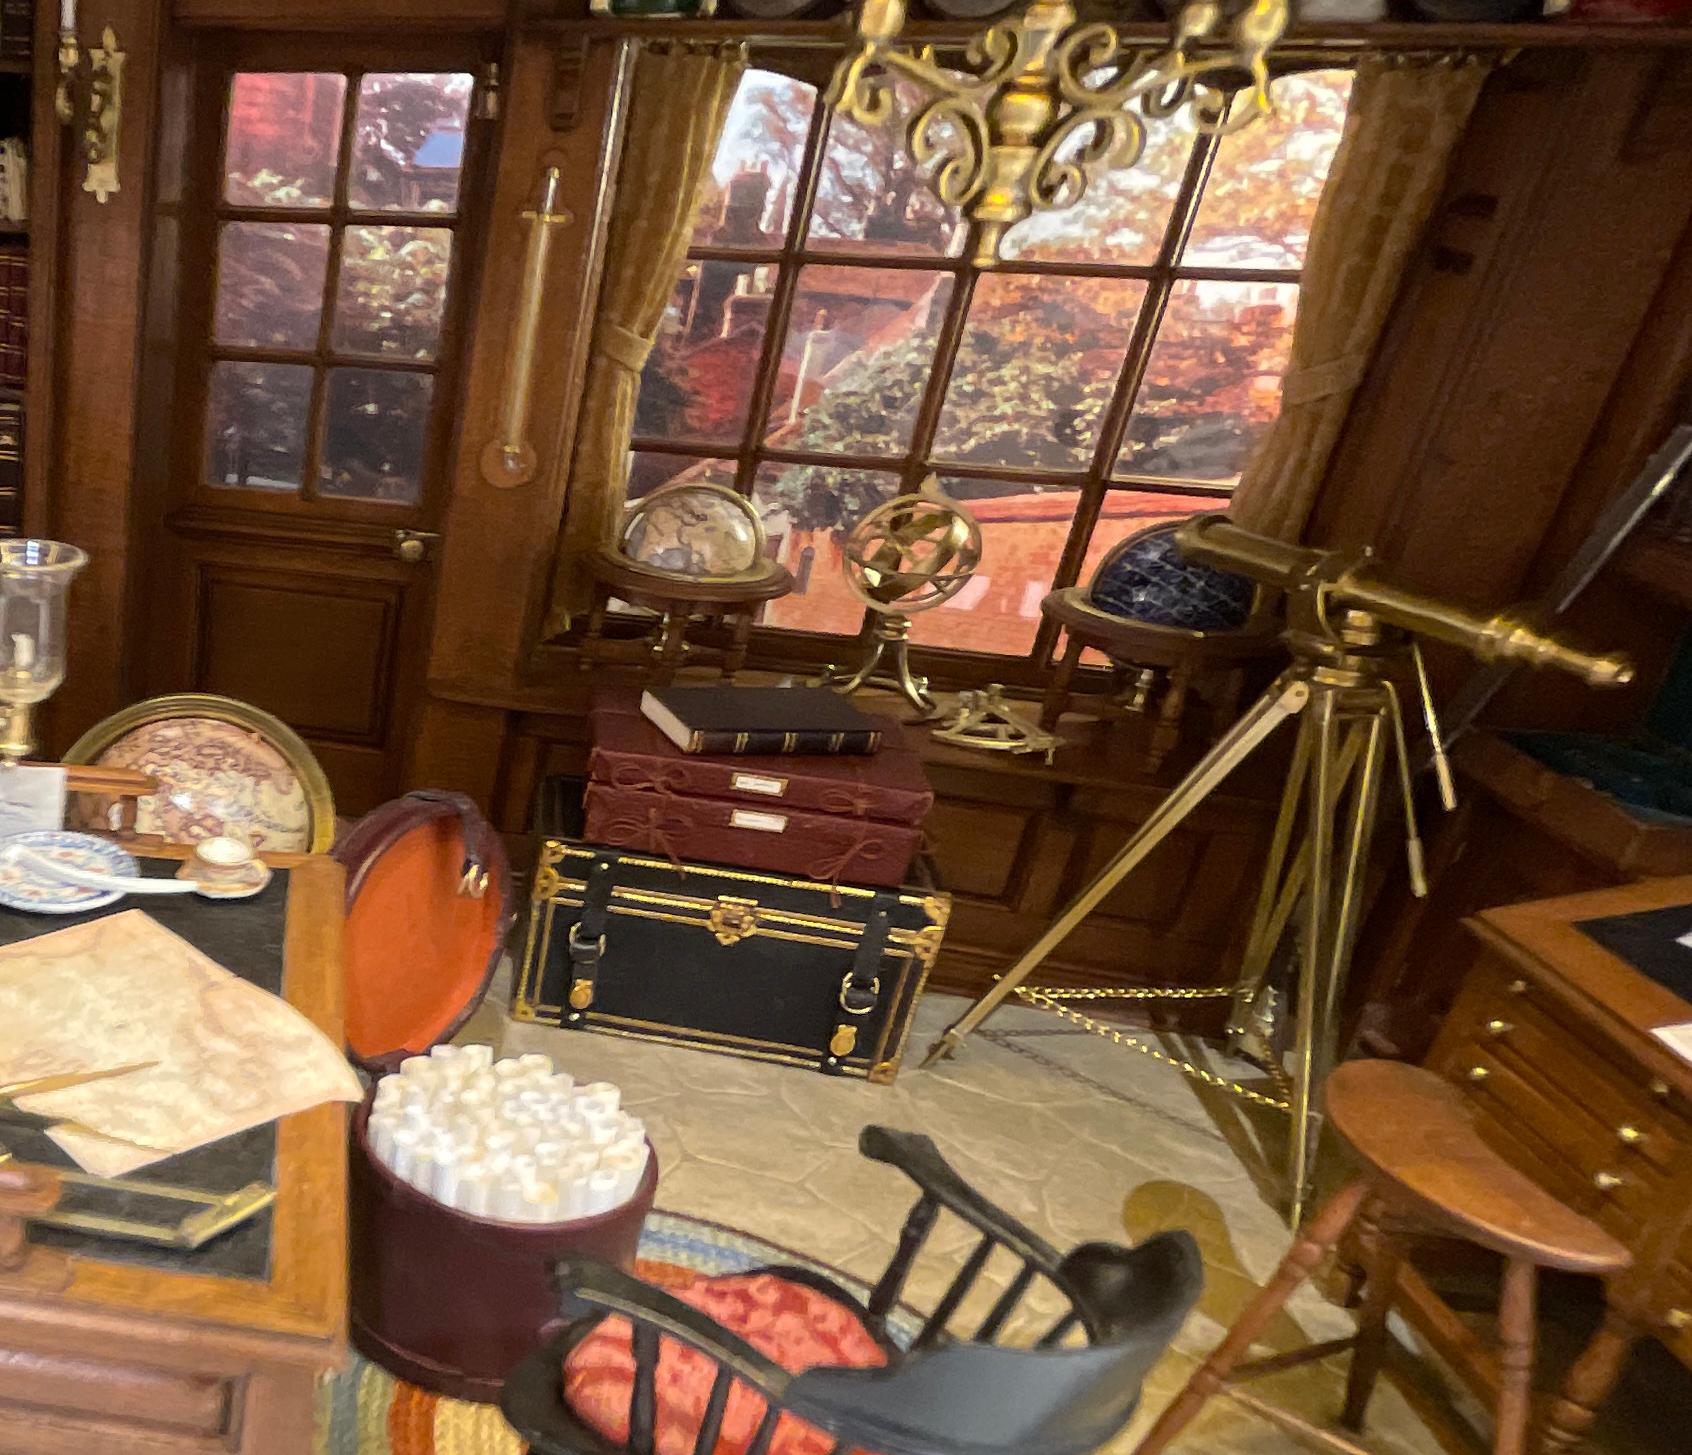 Büro eines Neuengland-Kartografen aus dem 18. Jahrhundert - Kupjack Studios Miniature Room im Angebot 3